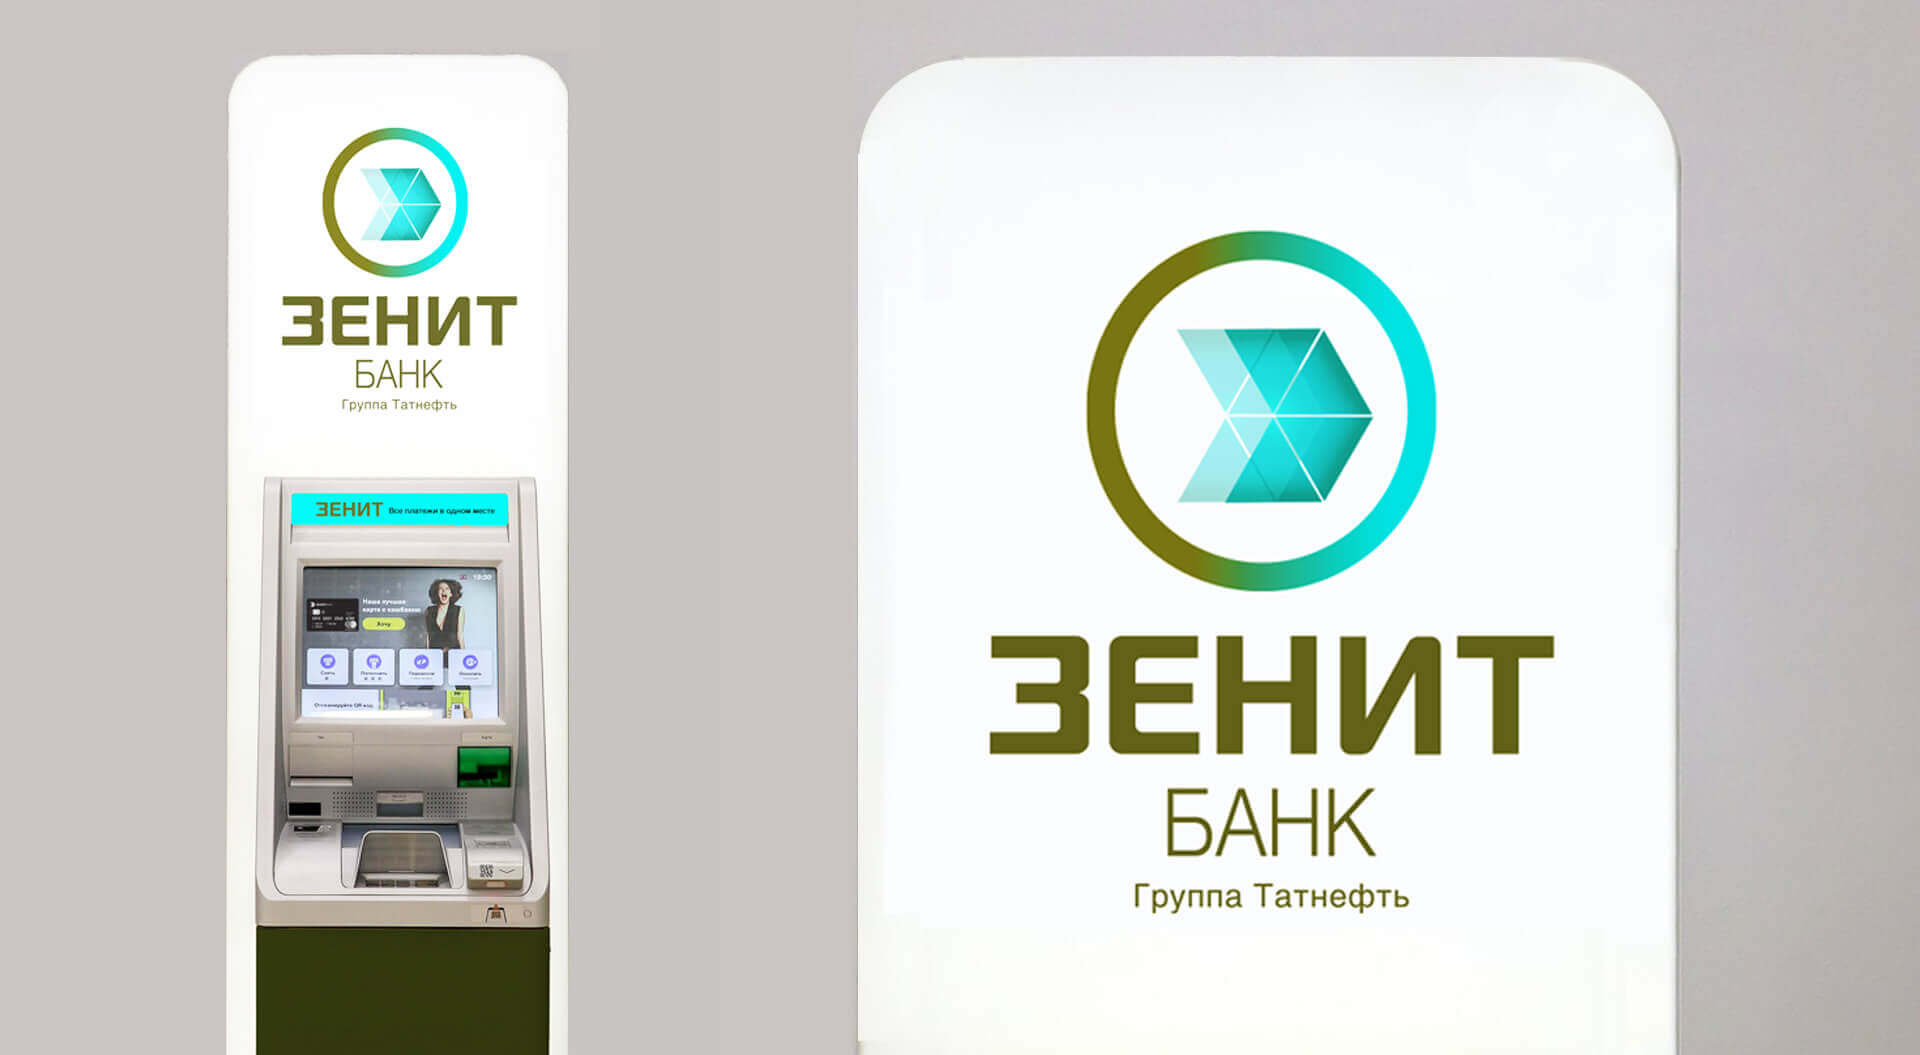 Zenit Bank Russia, Graphic Design ATM’s, Retail Branding, Brand Identity - CampbellRigg Agency